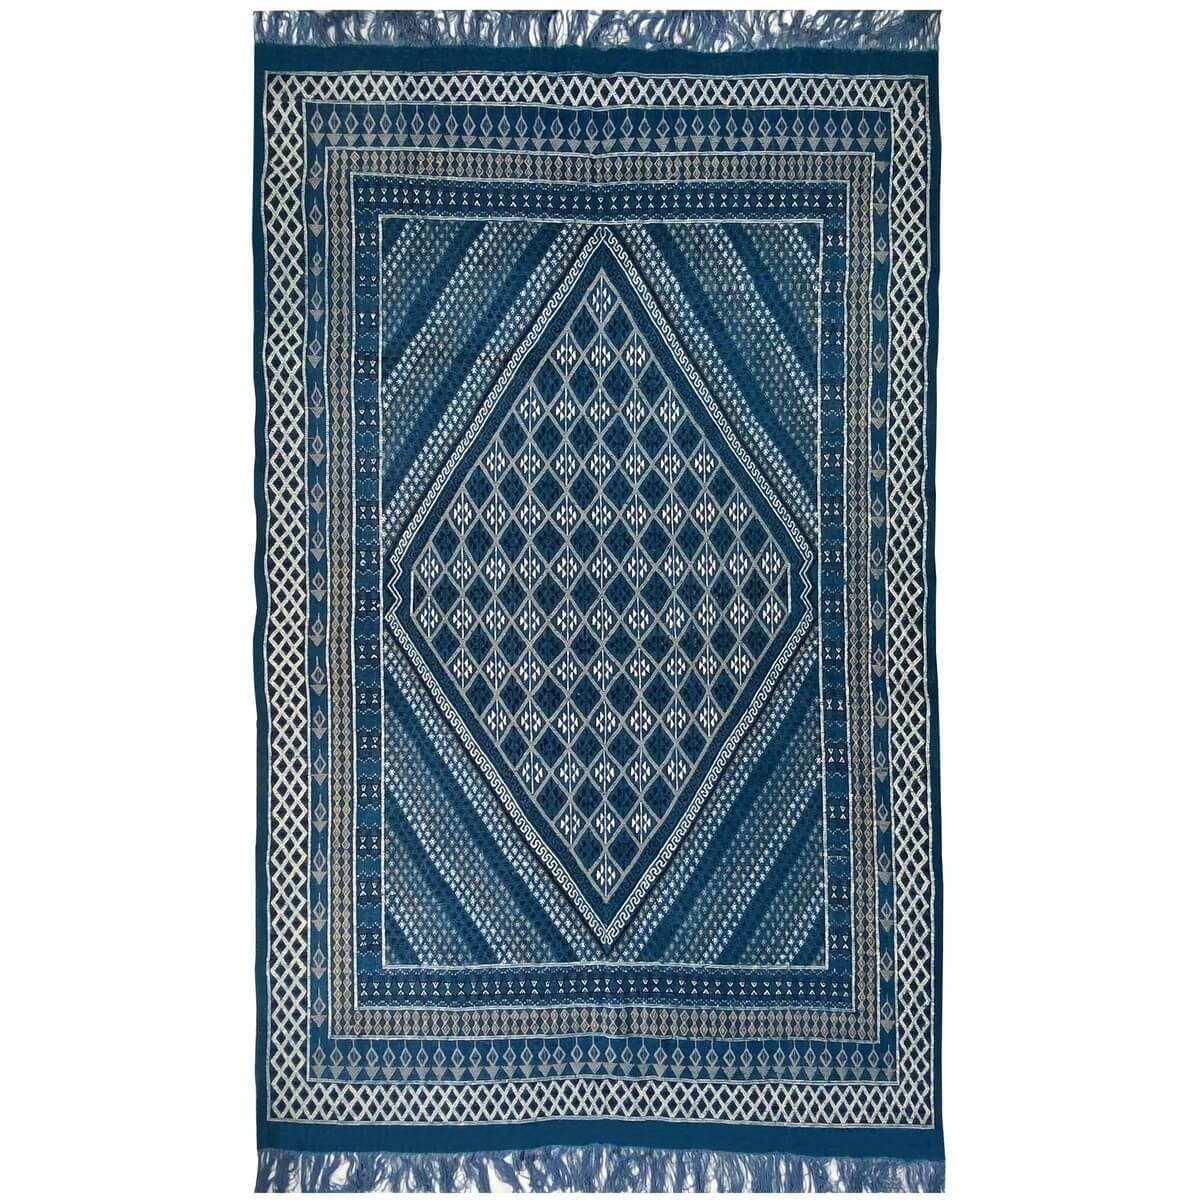 Berber tapijt Tapijt Margoum Layth 186x320 cm Blauw/Wit (Handgeweven, Wol, Tunesië) Tunesisch Margoum Tapijt uit de stad Kairoua